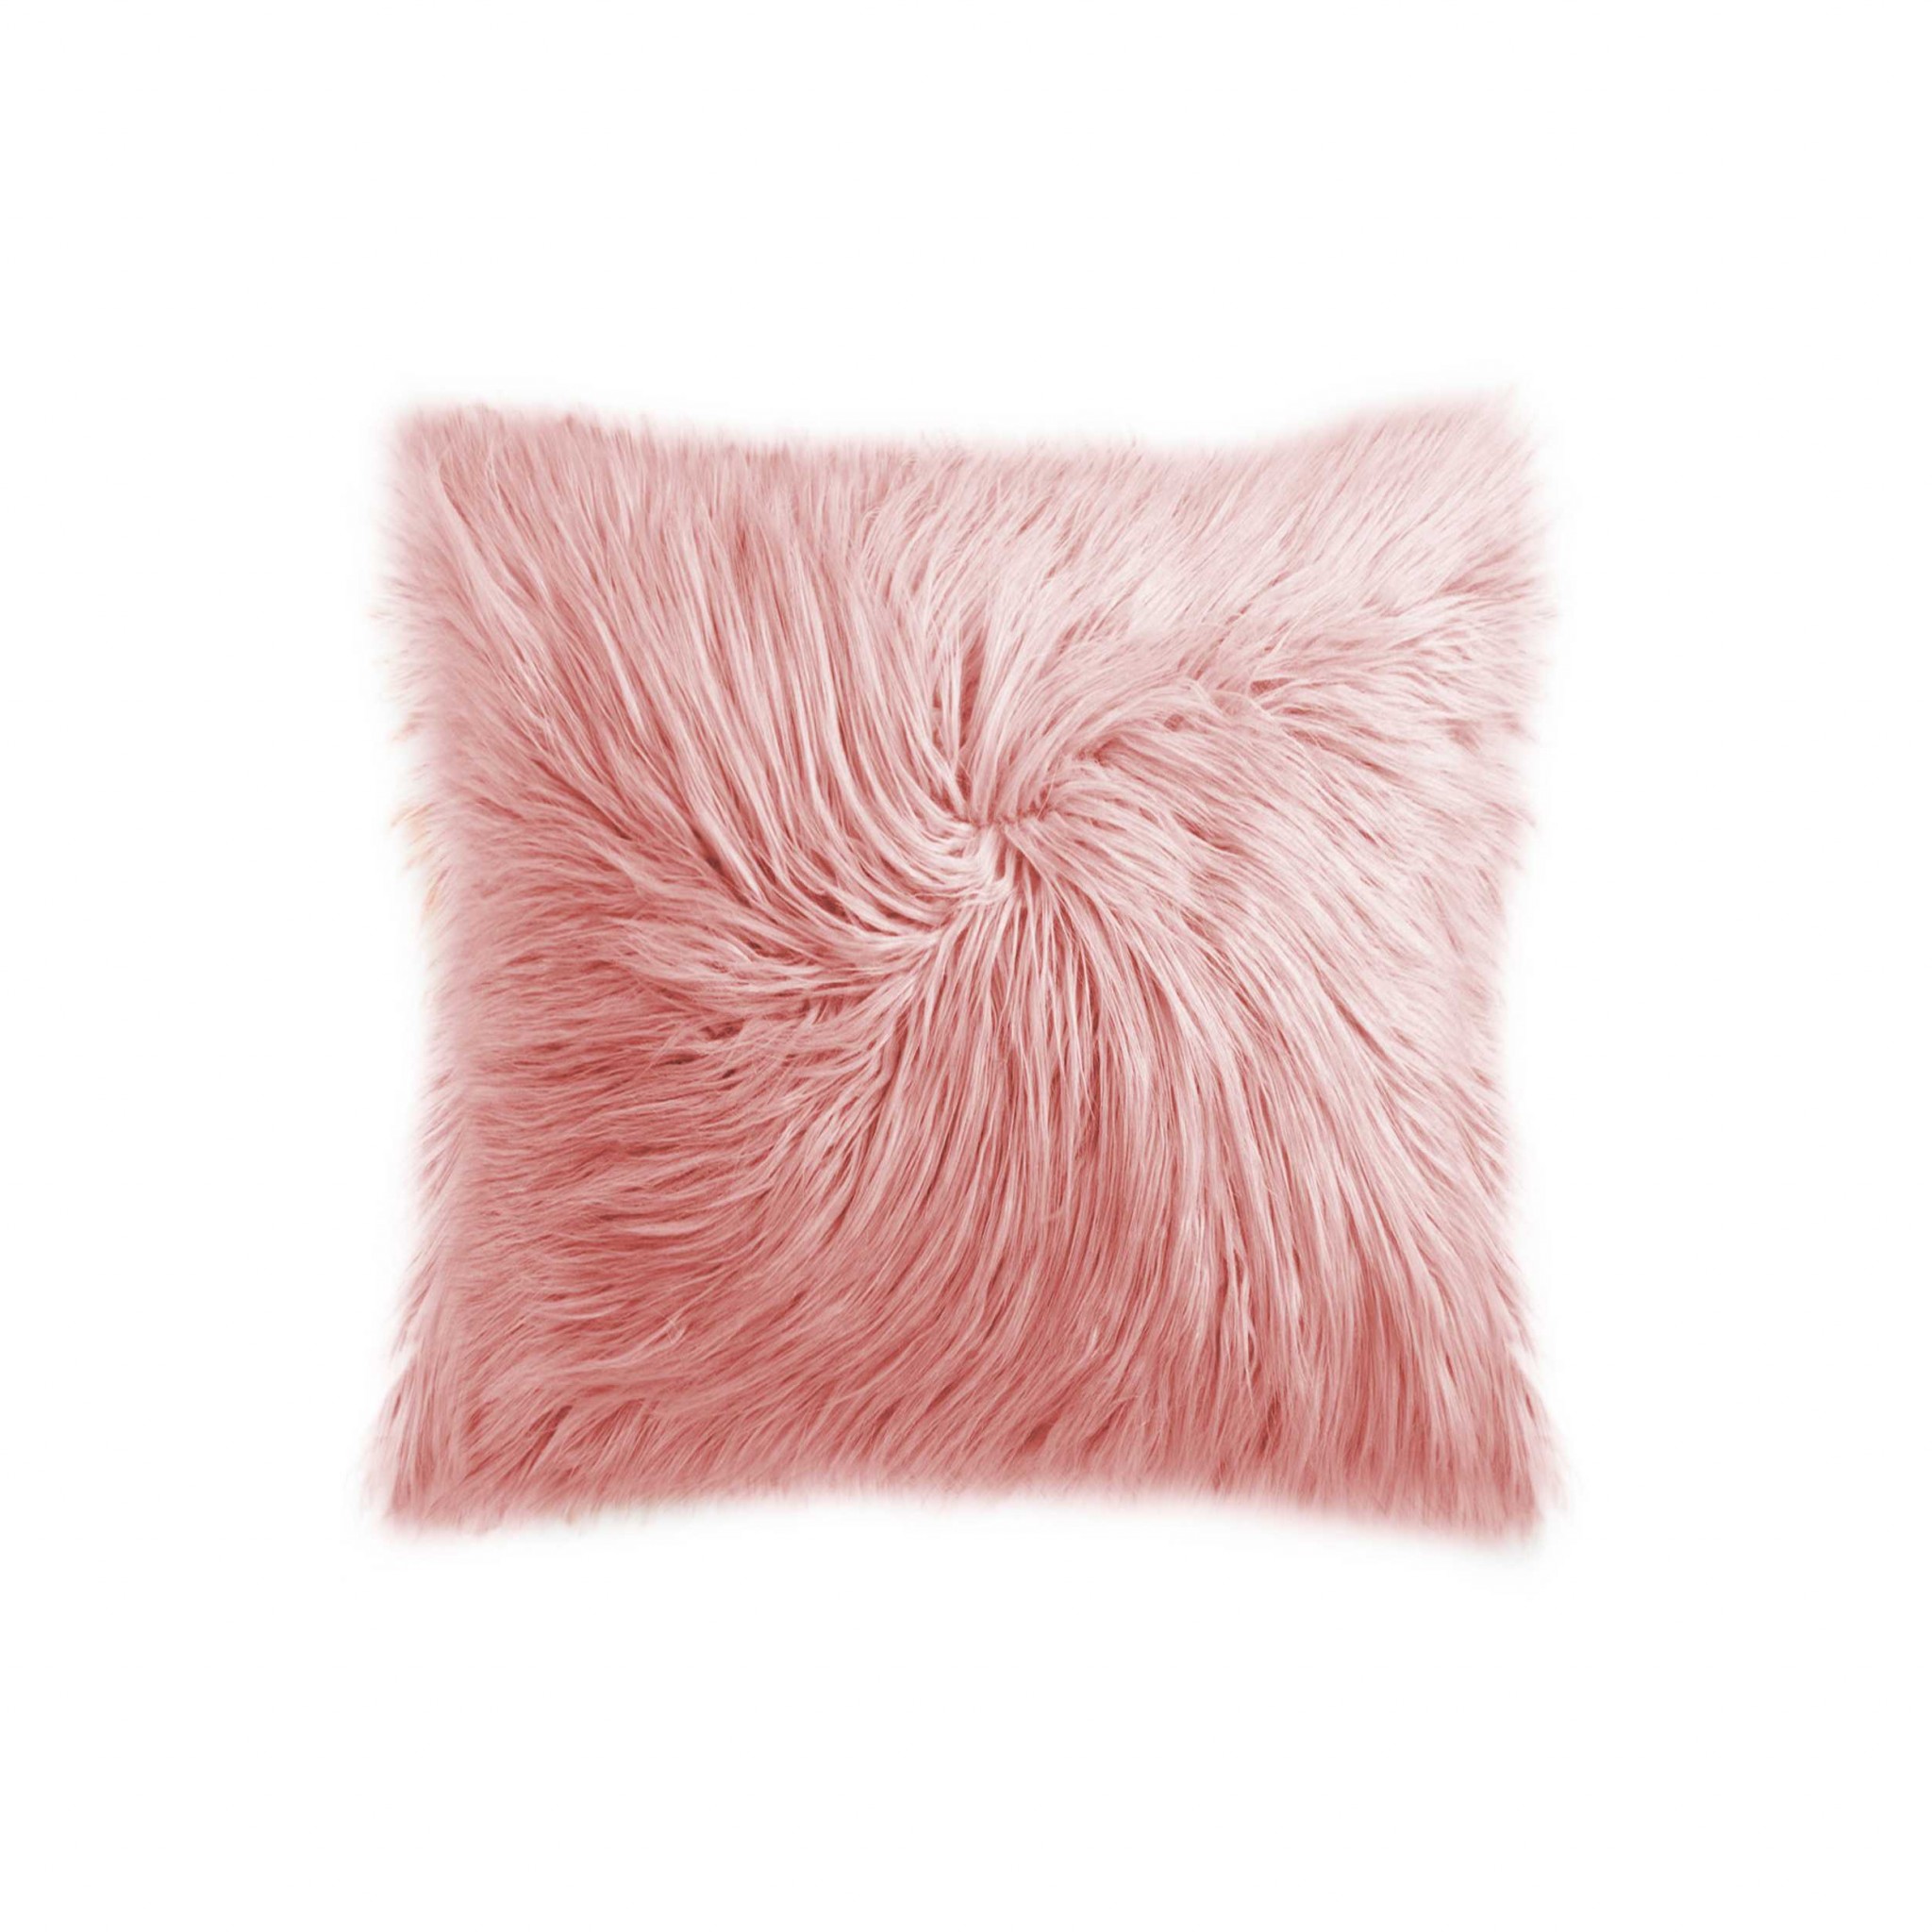 20" x 20" x 5" Dusty Rose Sheepskin Faux Fur - Pillow